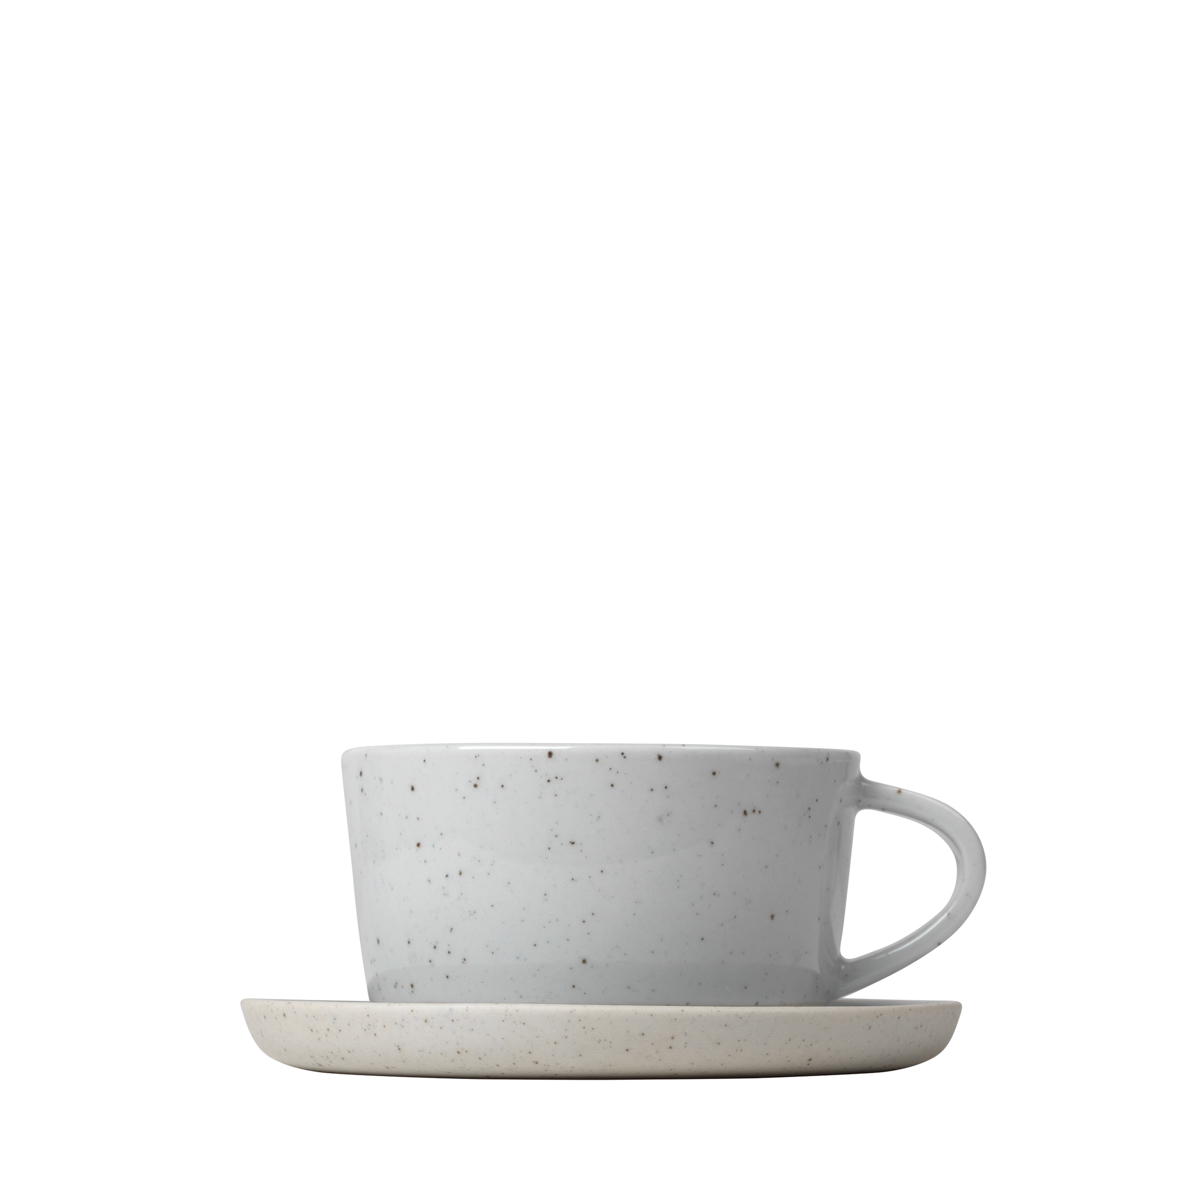 Set 2 Kaffeetassen, 4 tlg. -SABLO- Cloud 150 ml, Ø 8,5 cm , Ø 12 cm. Material: Keramik. Von Blomus.